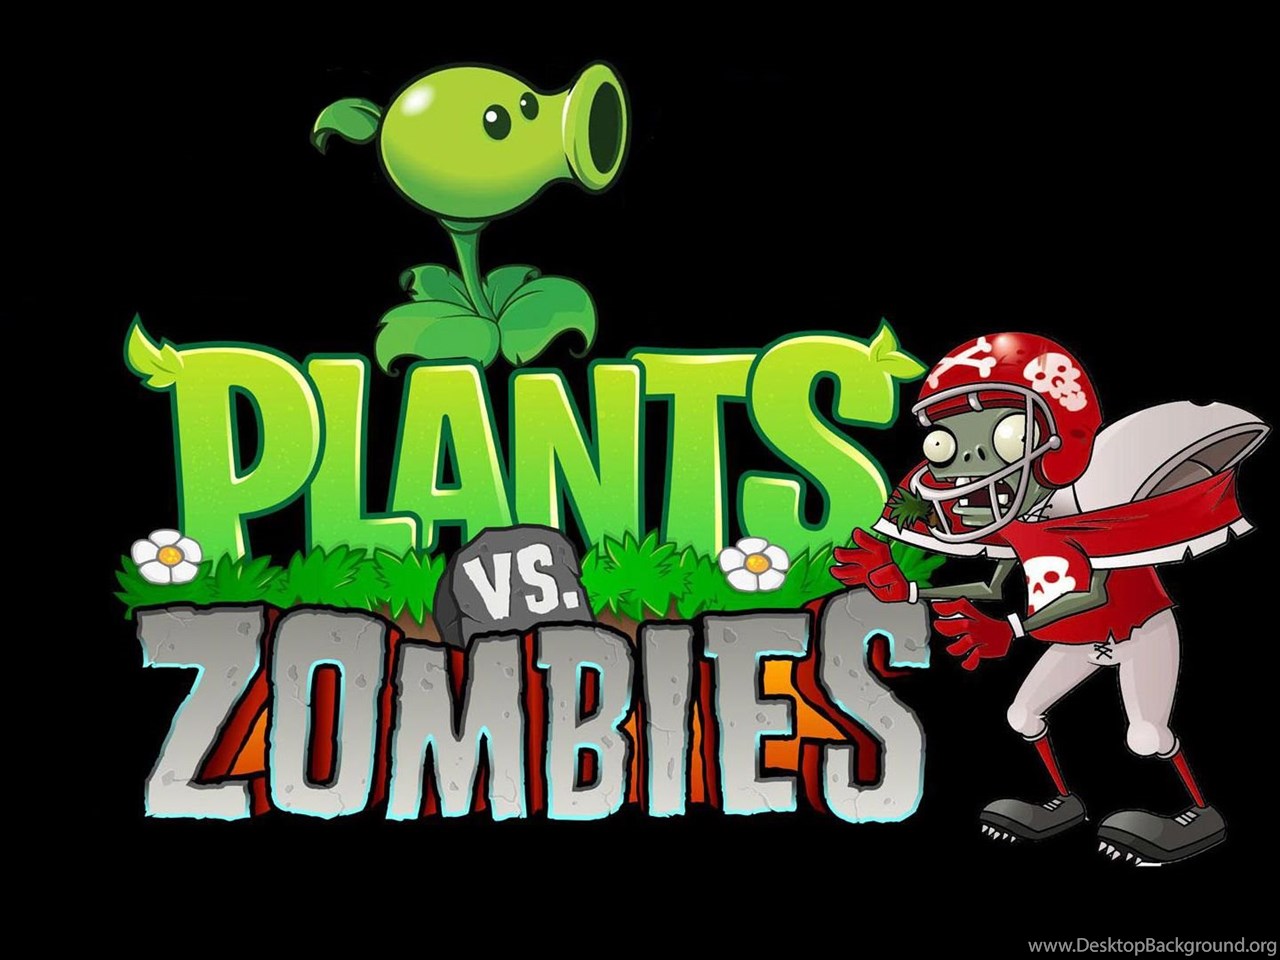 Игра зомби мозги. Растения против зомби 2 персонажи. PVZ обои. Белка против зомби. ПВЗ 2 растения и зомби.